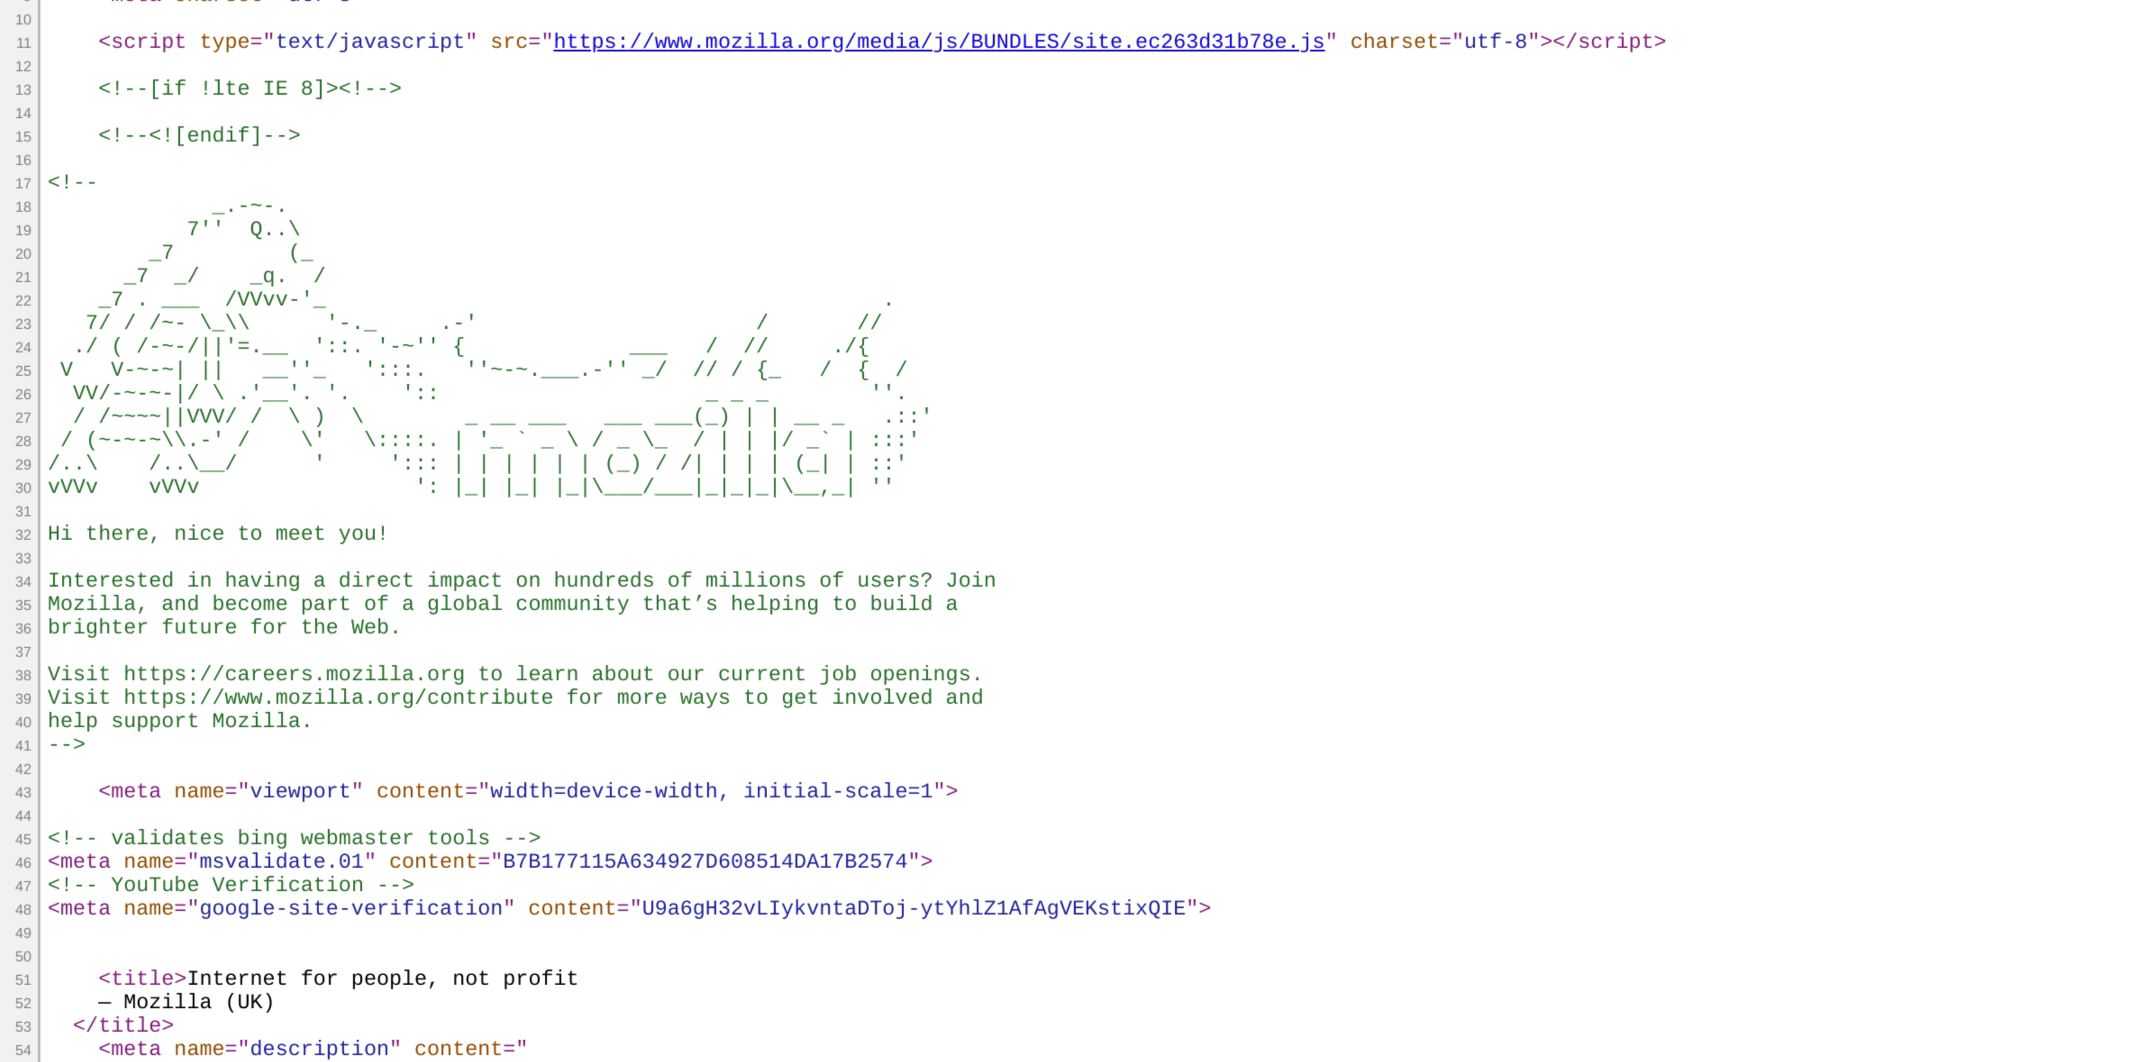 Mozilla source code